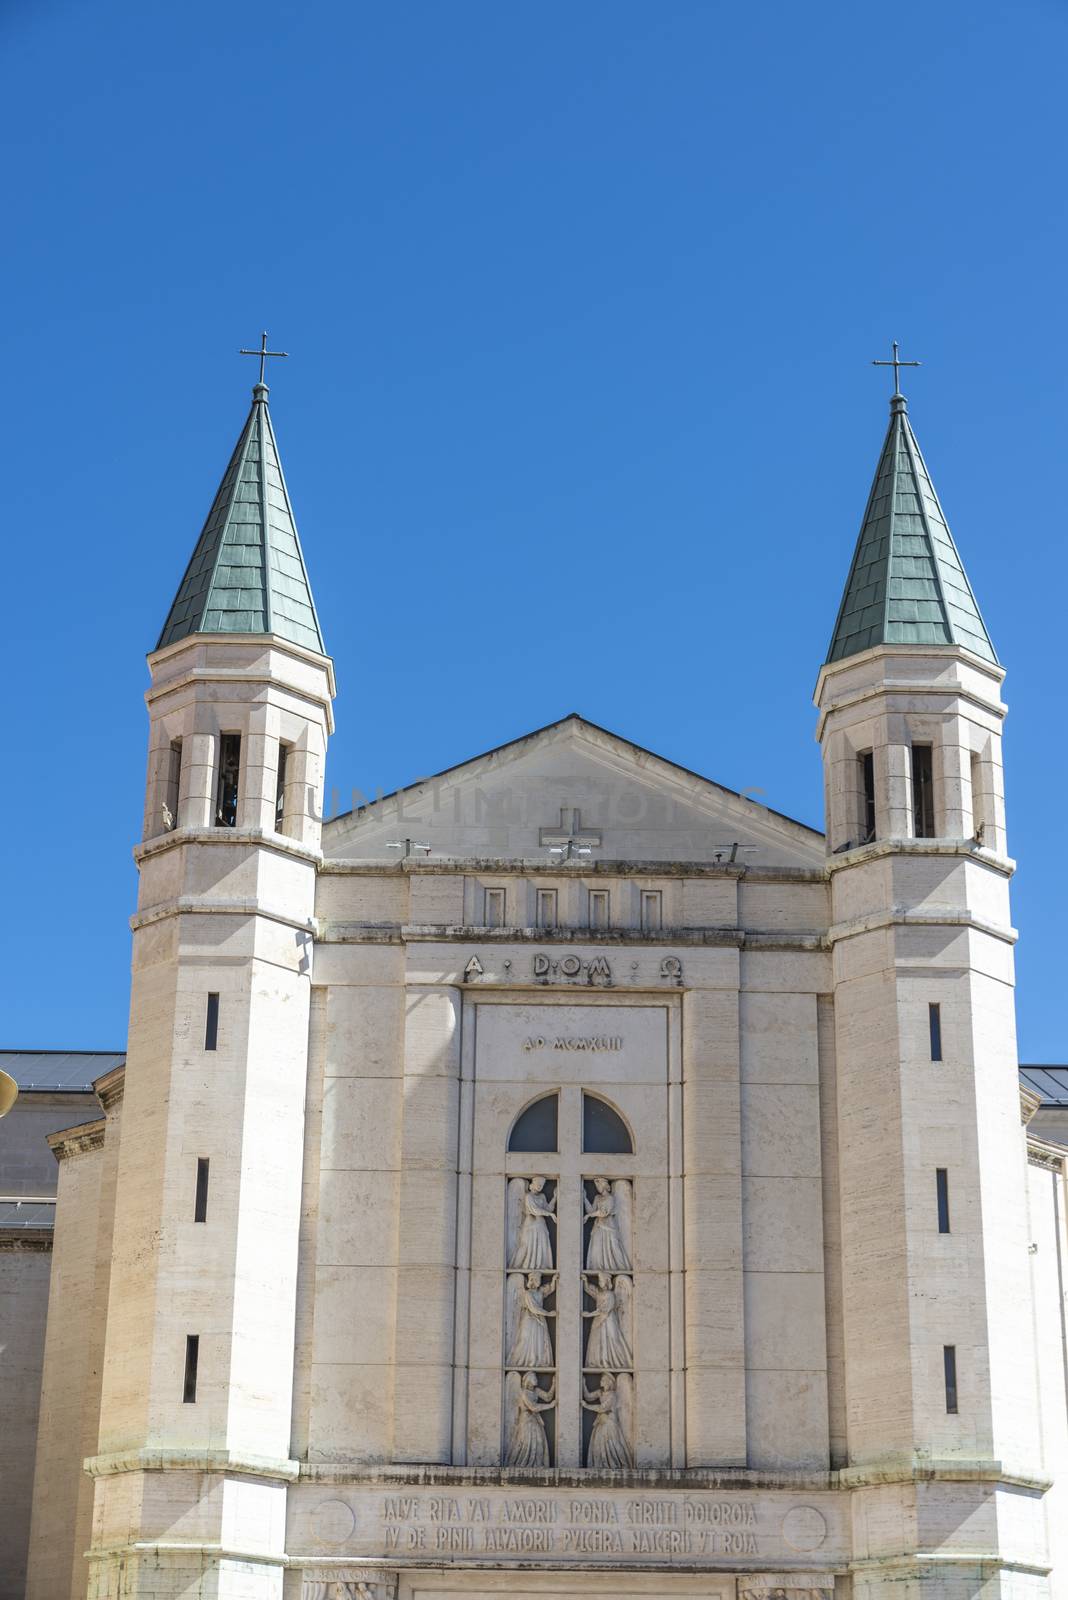 cascia,italy july 05 2020:cathedral of santa rita of cascia on a sunny day